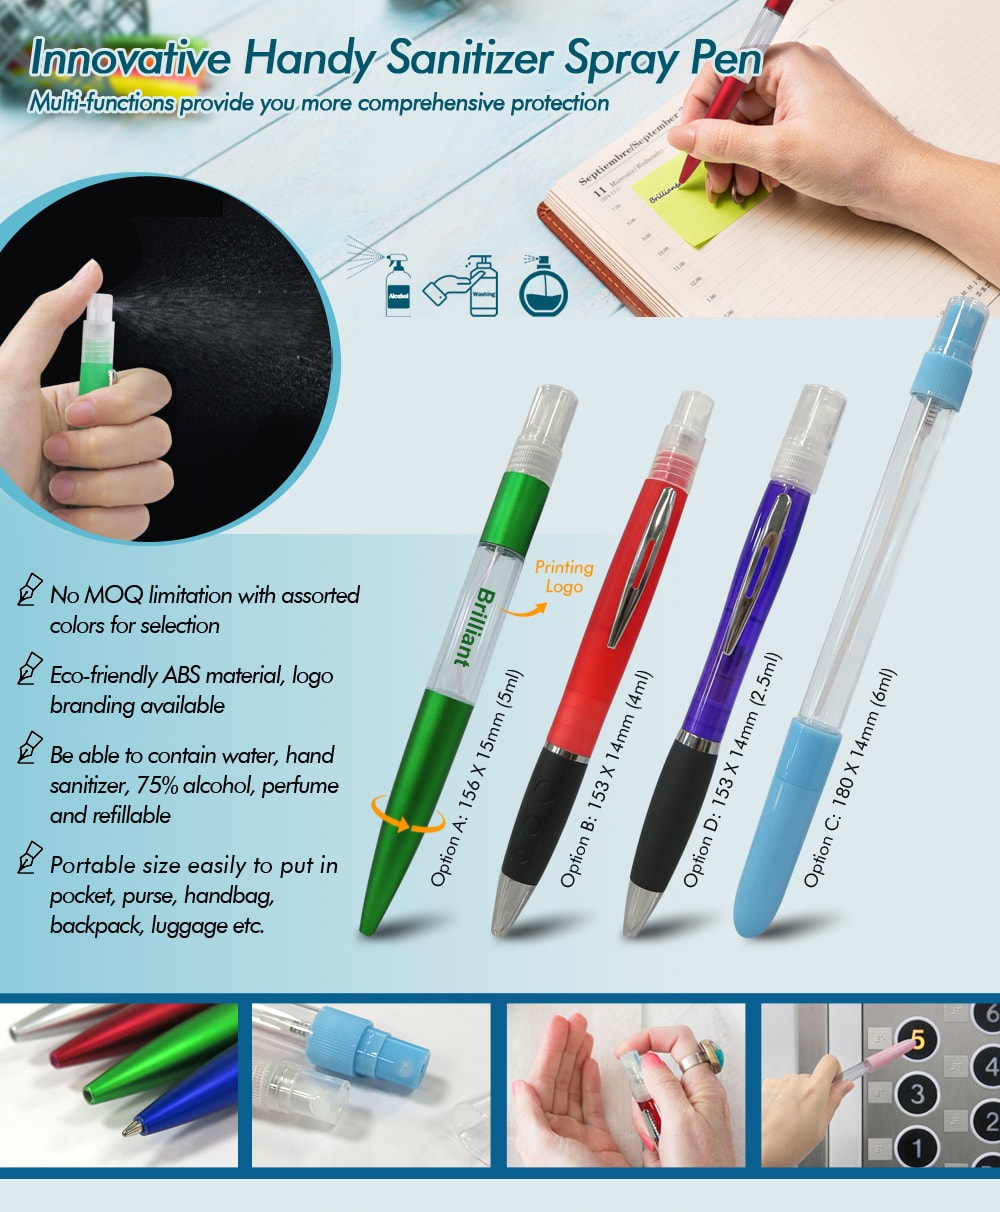 Innovative Handy Sanitizer Spray Pen